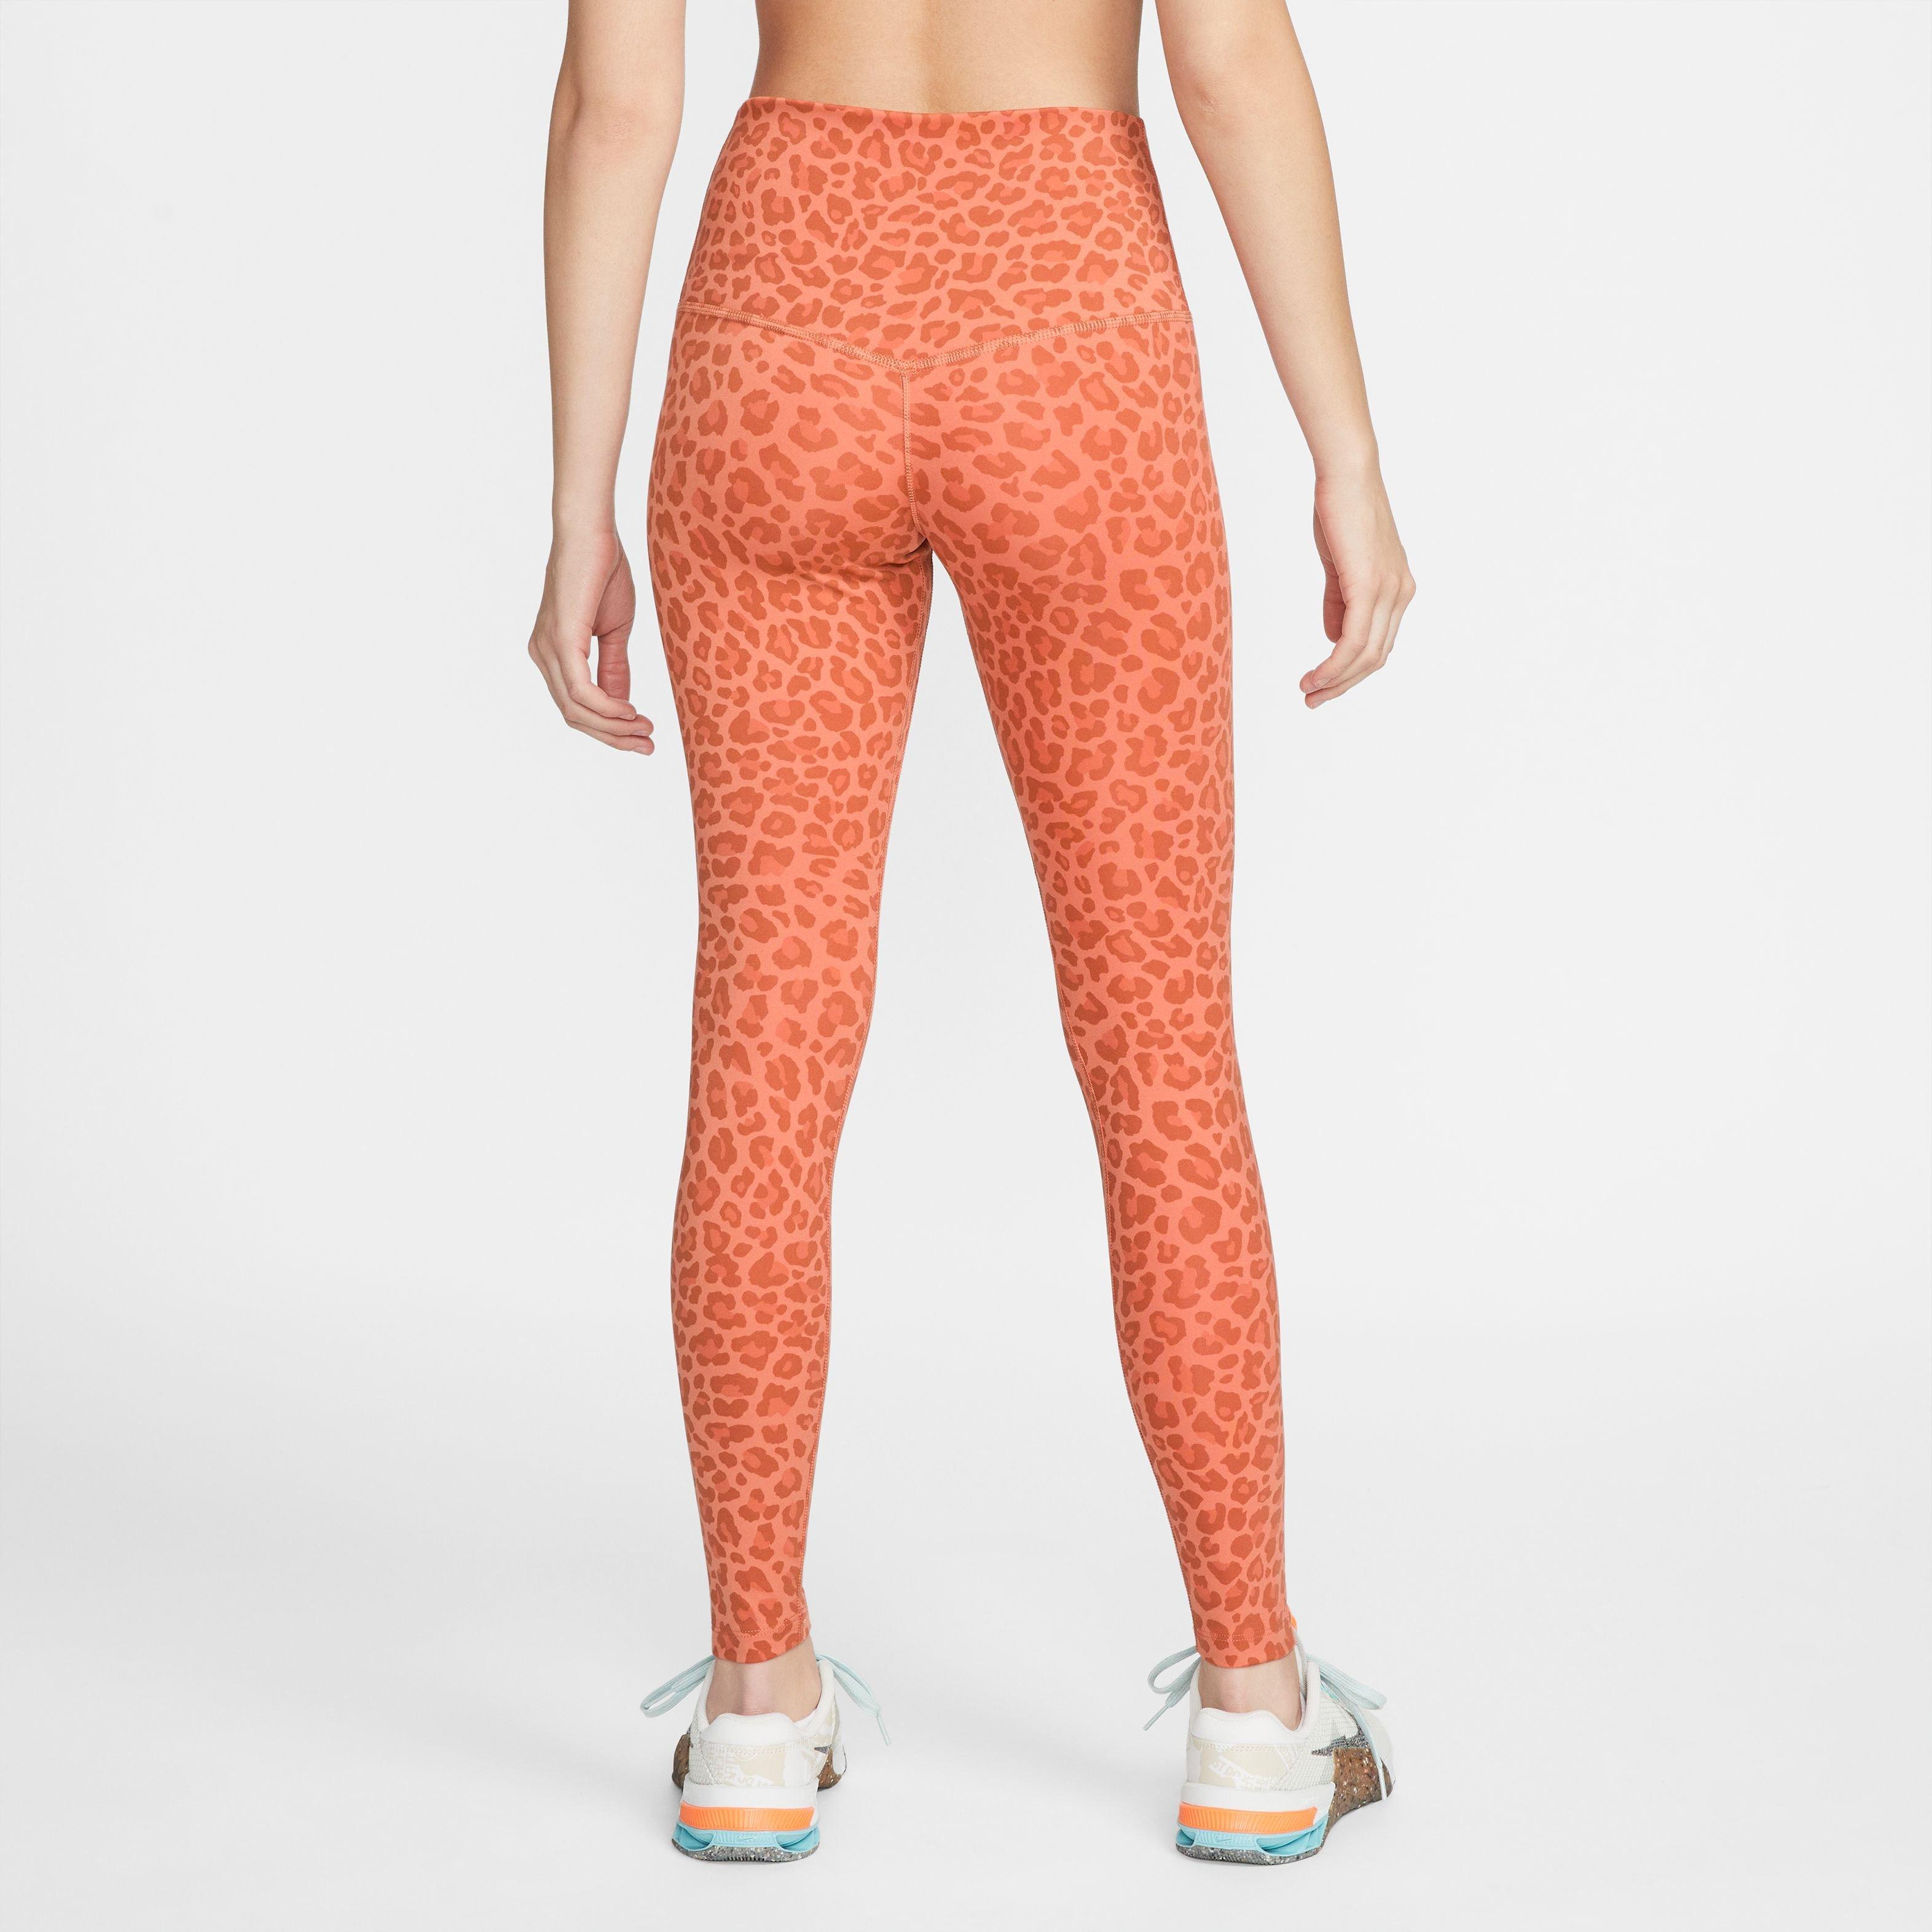 Buy Nike Women's Racer Dri-FIT Leopard-Print Capri Leggings